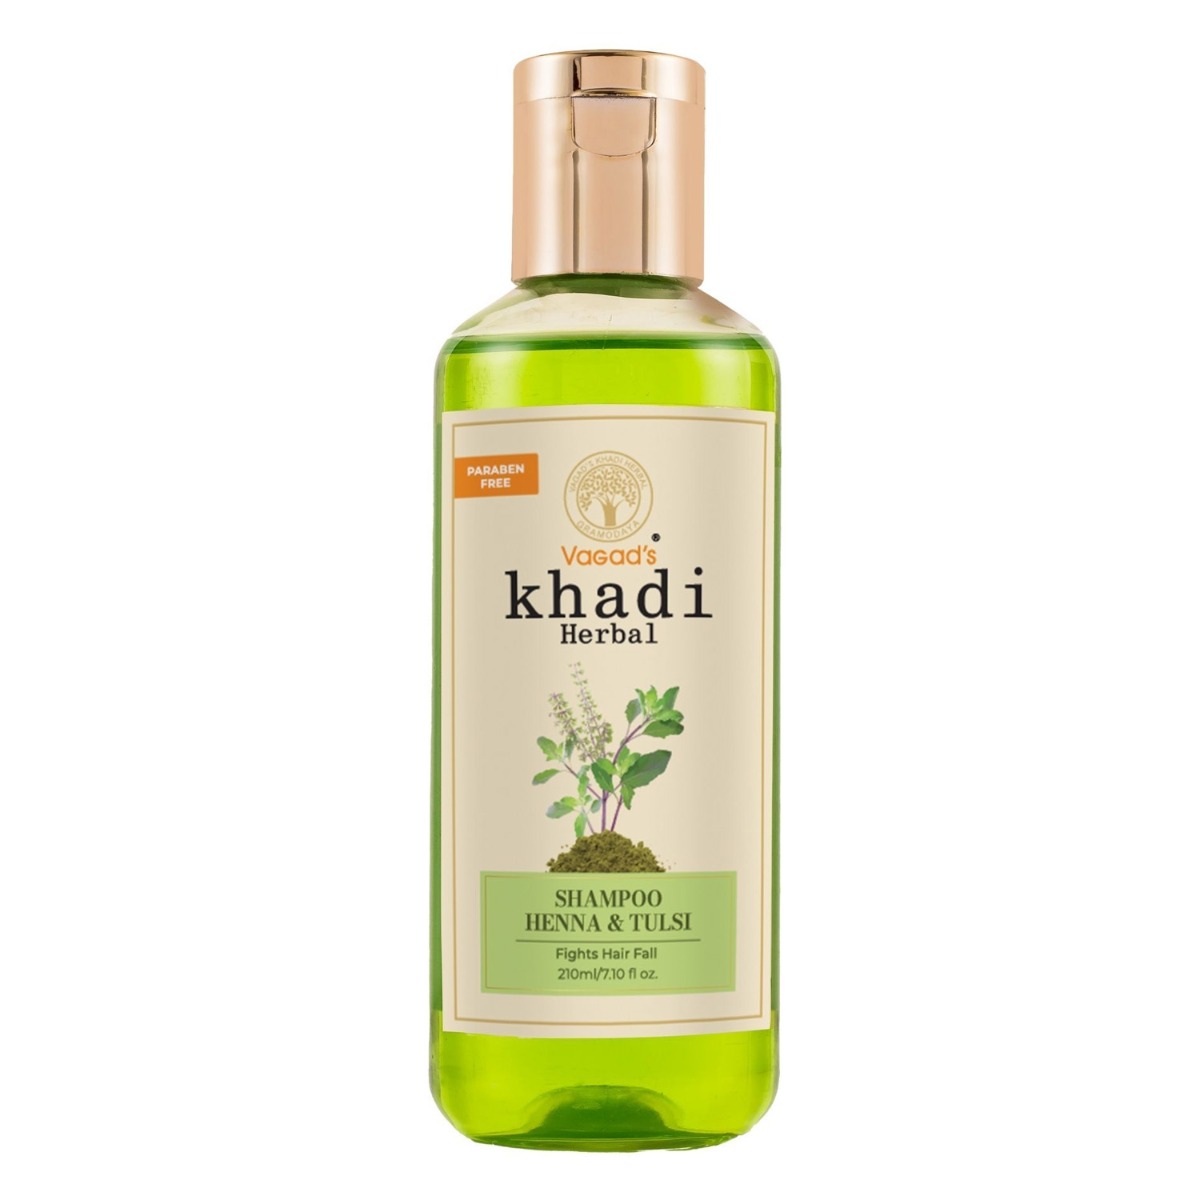 Vagad's Khadi Henna & Tulsi Shampoo, 210ml